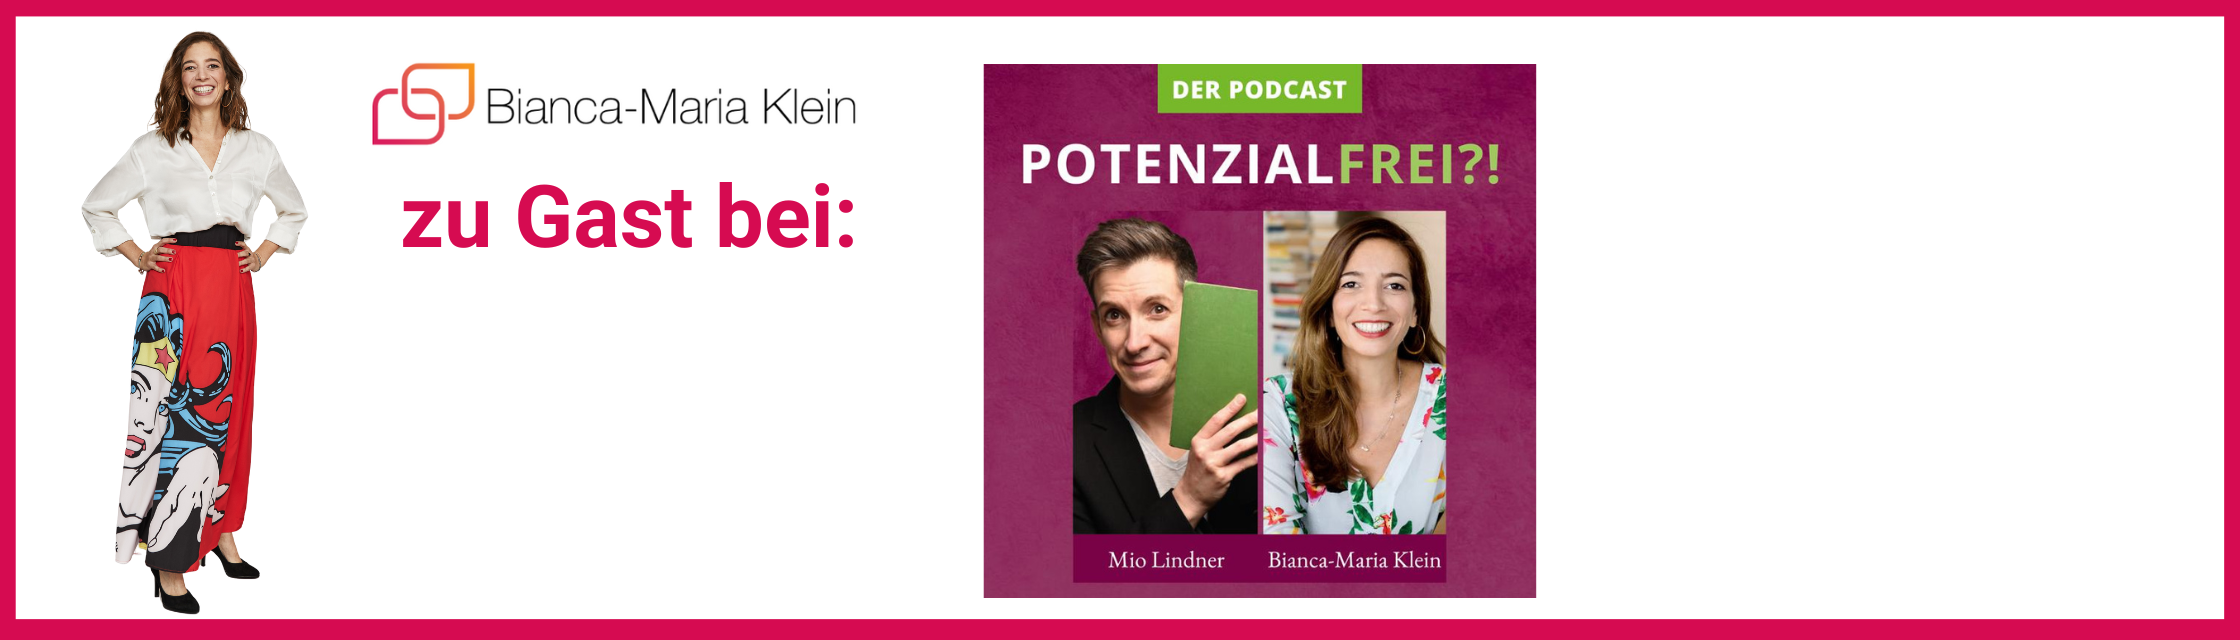 Podcast-Interview bei POTENZIALFREI - Bianca-Maria Klein